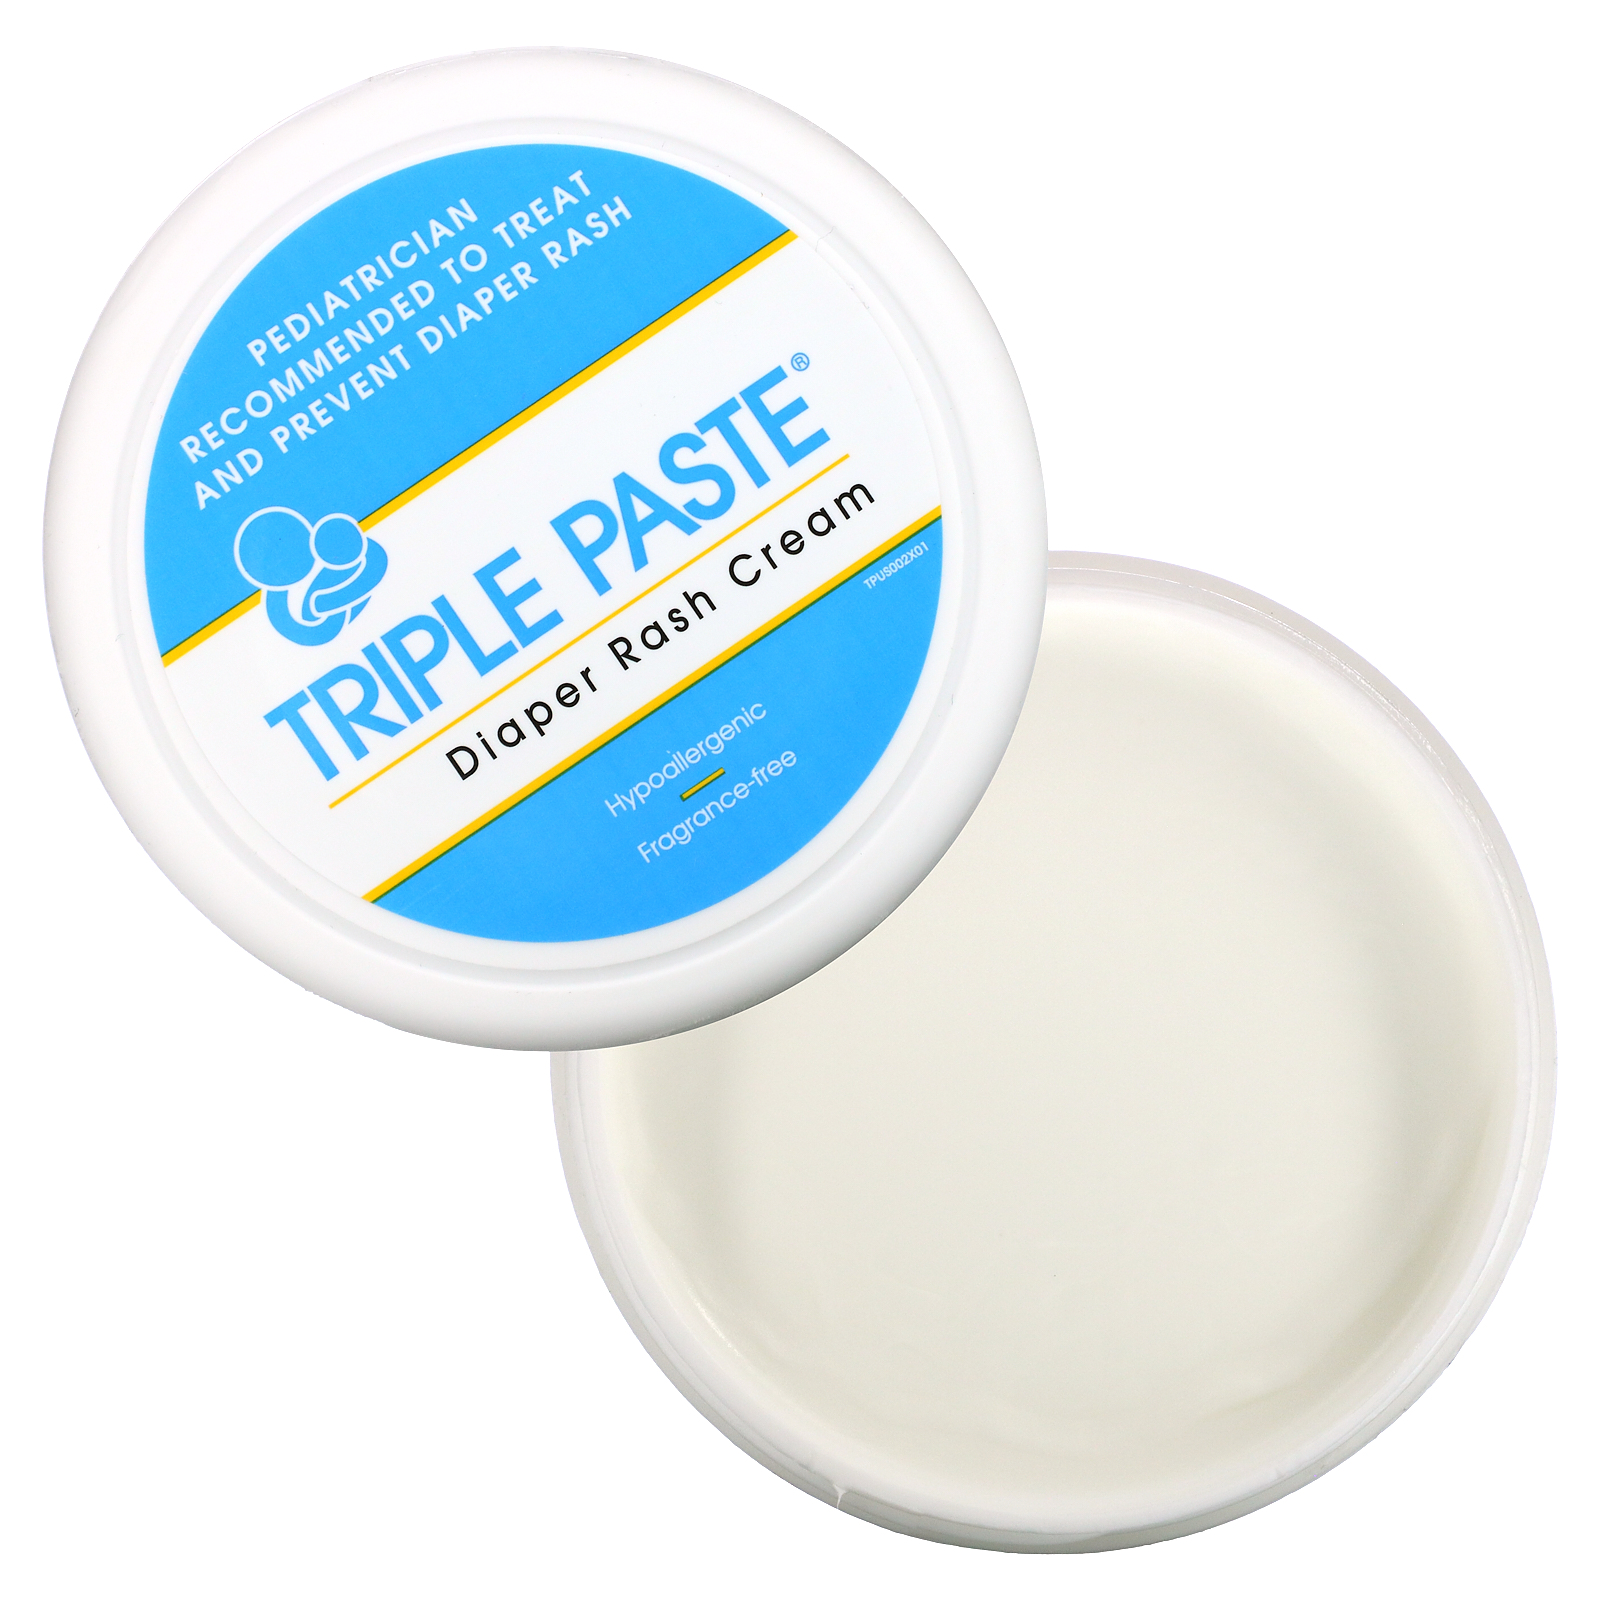 Triple Paste Zinc Oxide Diaper Rash Cream Fragrance Free 8 Oz 227 G